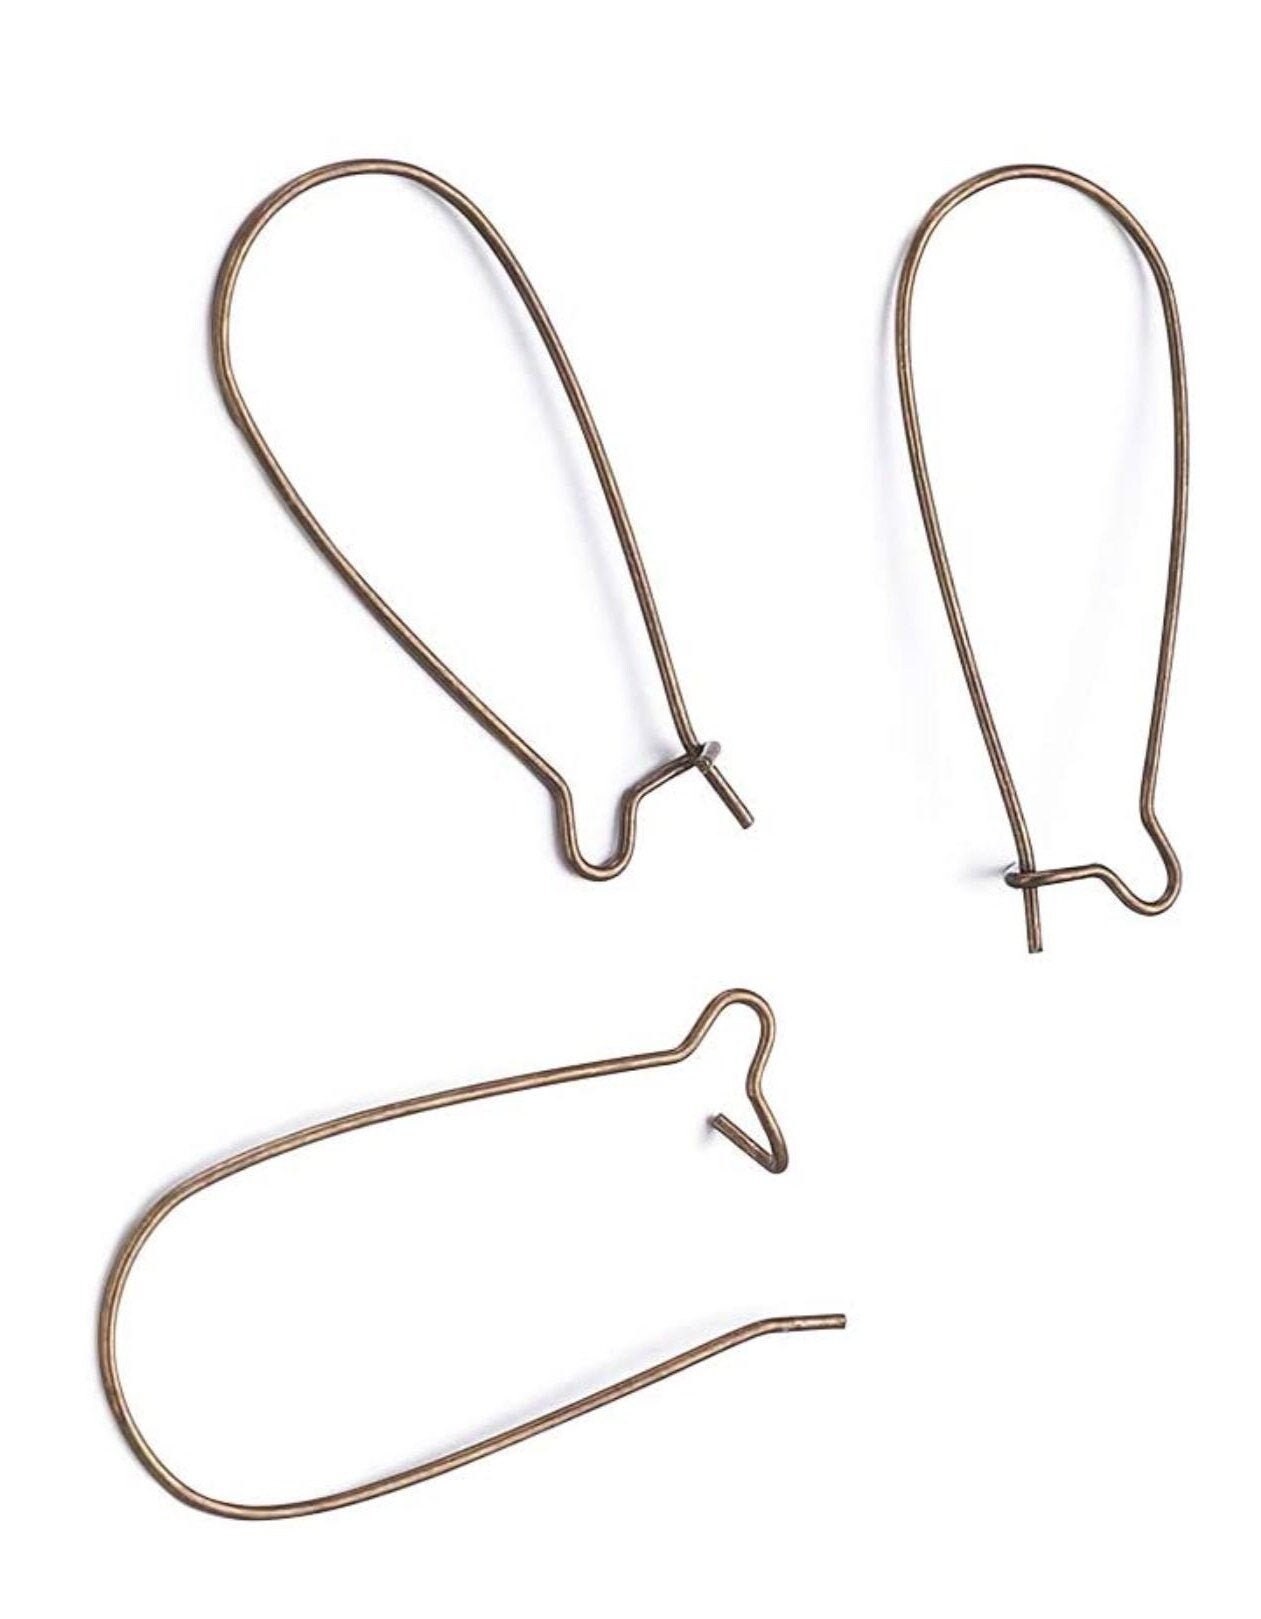 Adabele 200pcs Hypoallergenic Stud Earring Posts Findings Silver Plated  Brass 3mm Small Flat Board Glue On Setting with Earnut Backs for Earrings